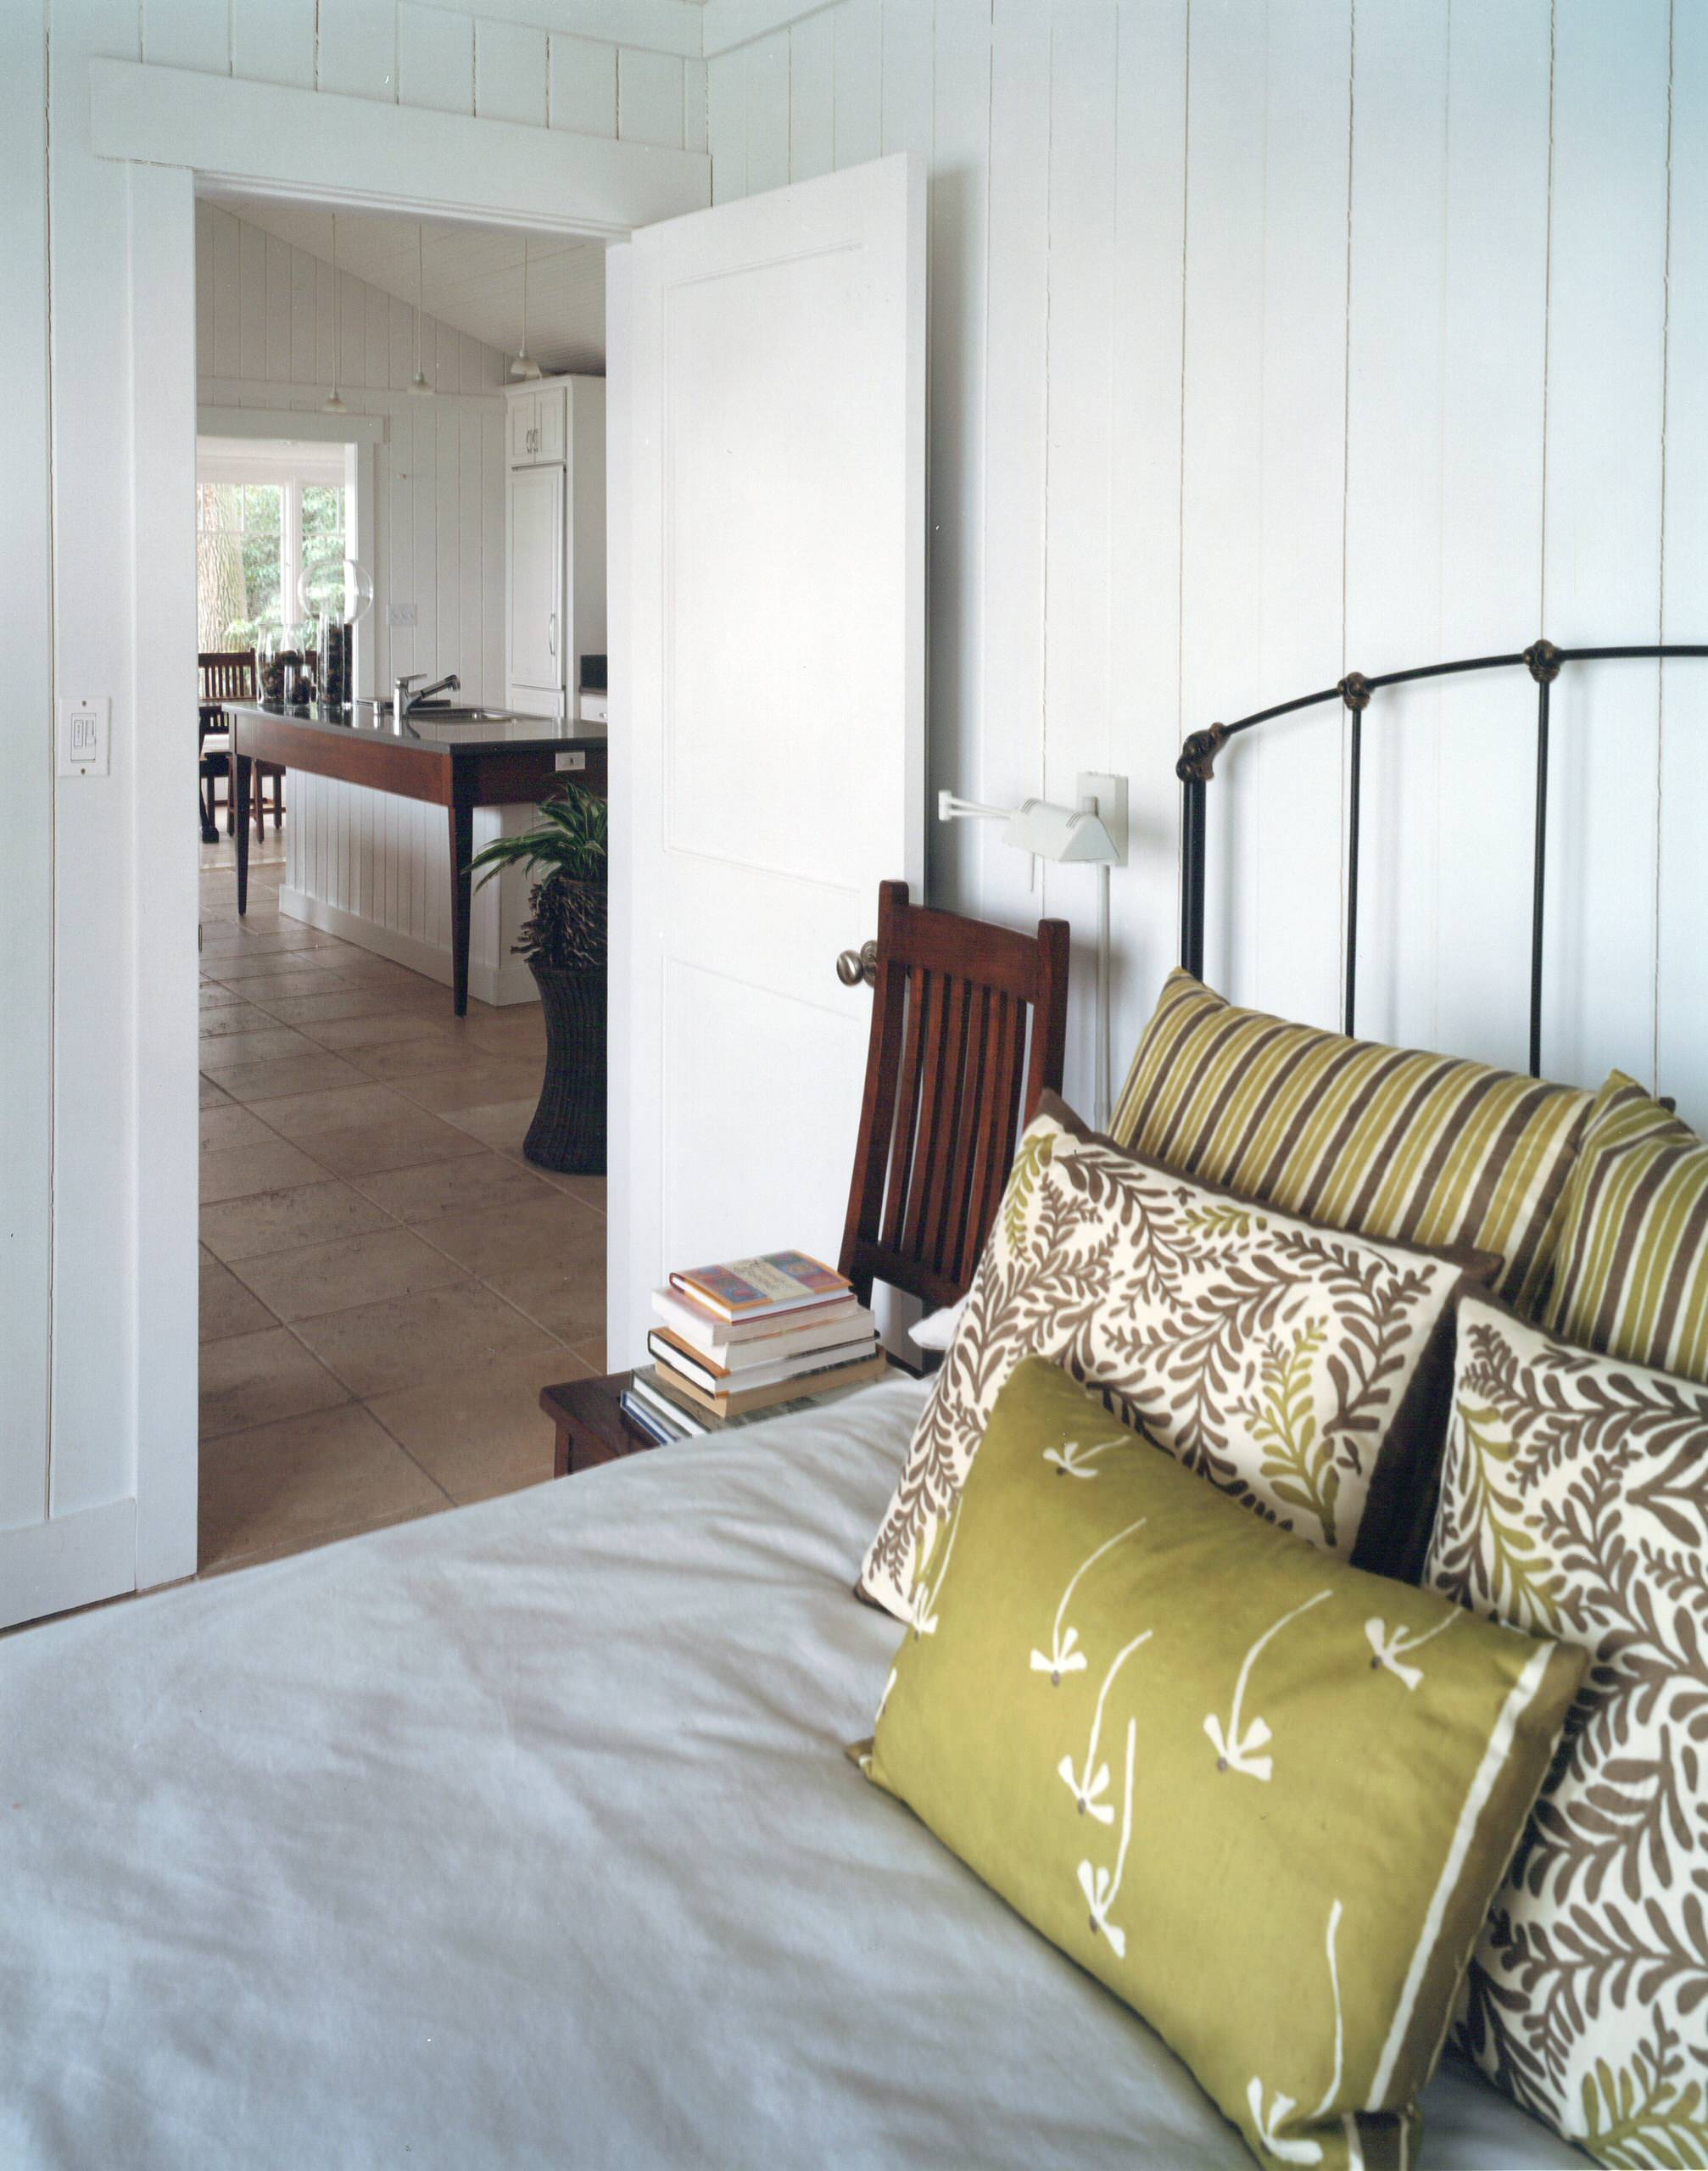 https://www.houzz.com/photos/bay-cottage-traditional-bedroom-dc-metro-phvw-vp~4403168